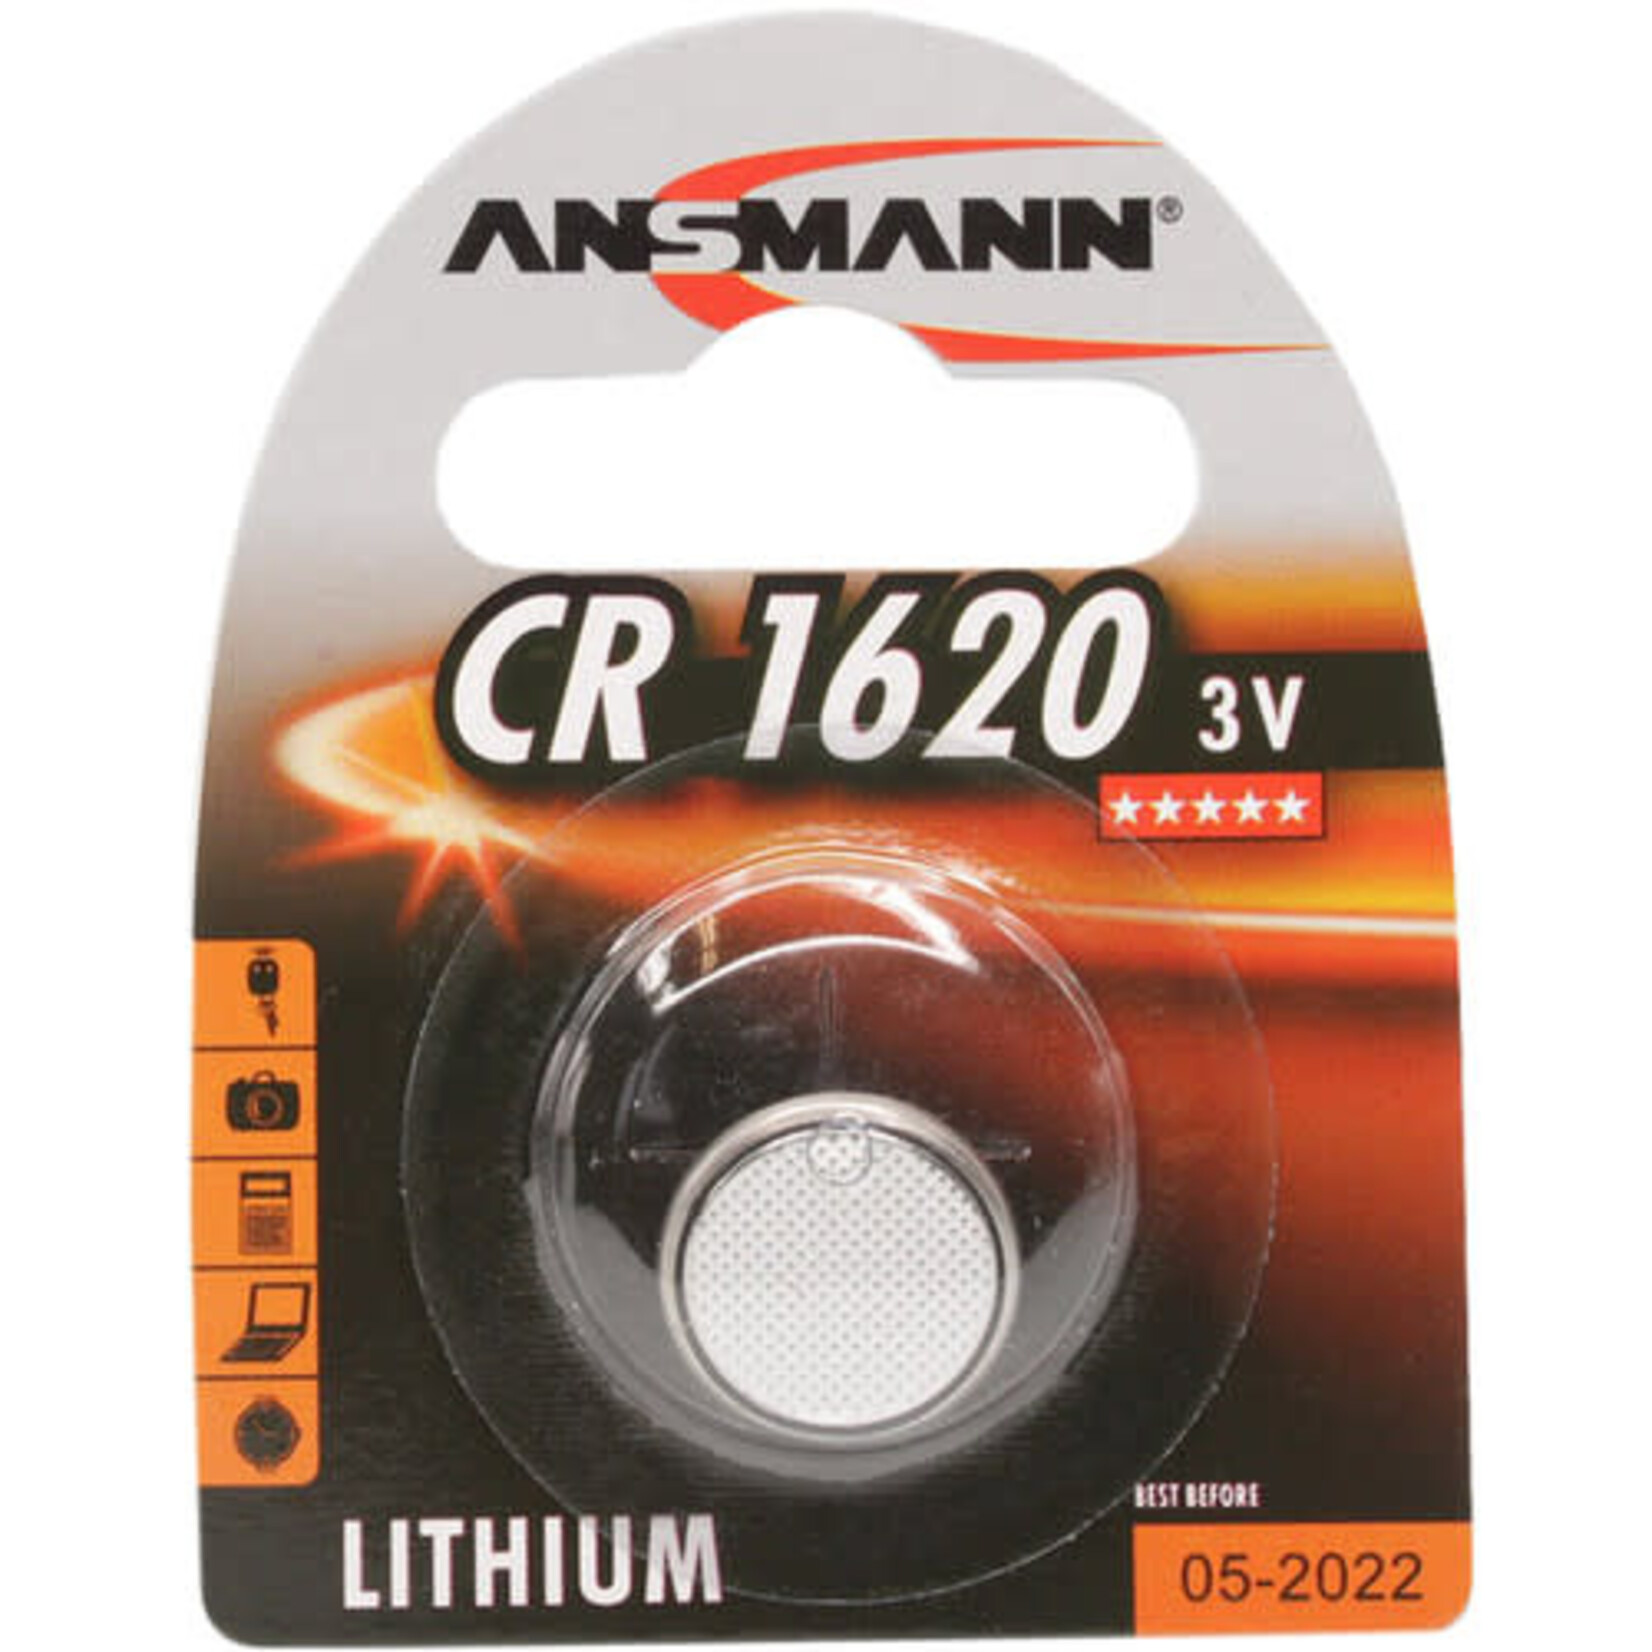 Ansmann Ansmann CR1620 3V Alkaline